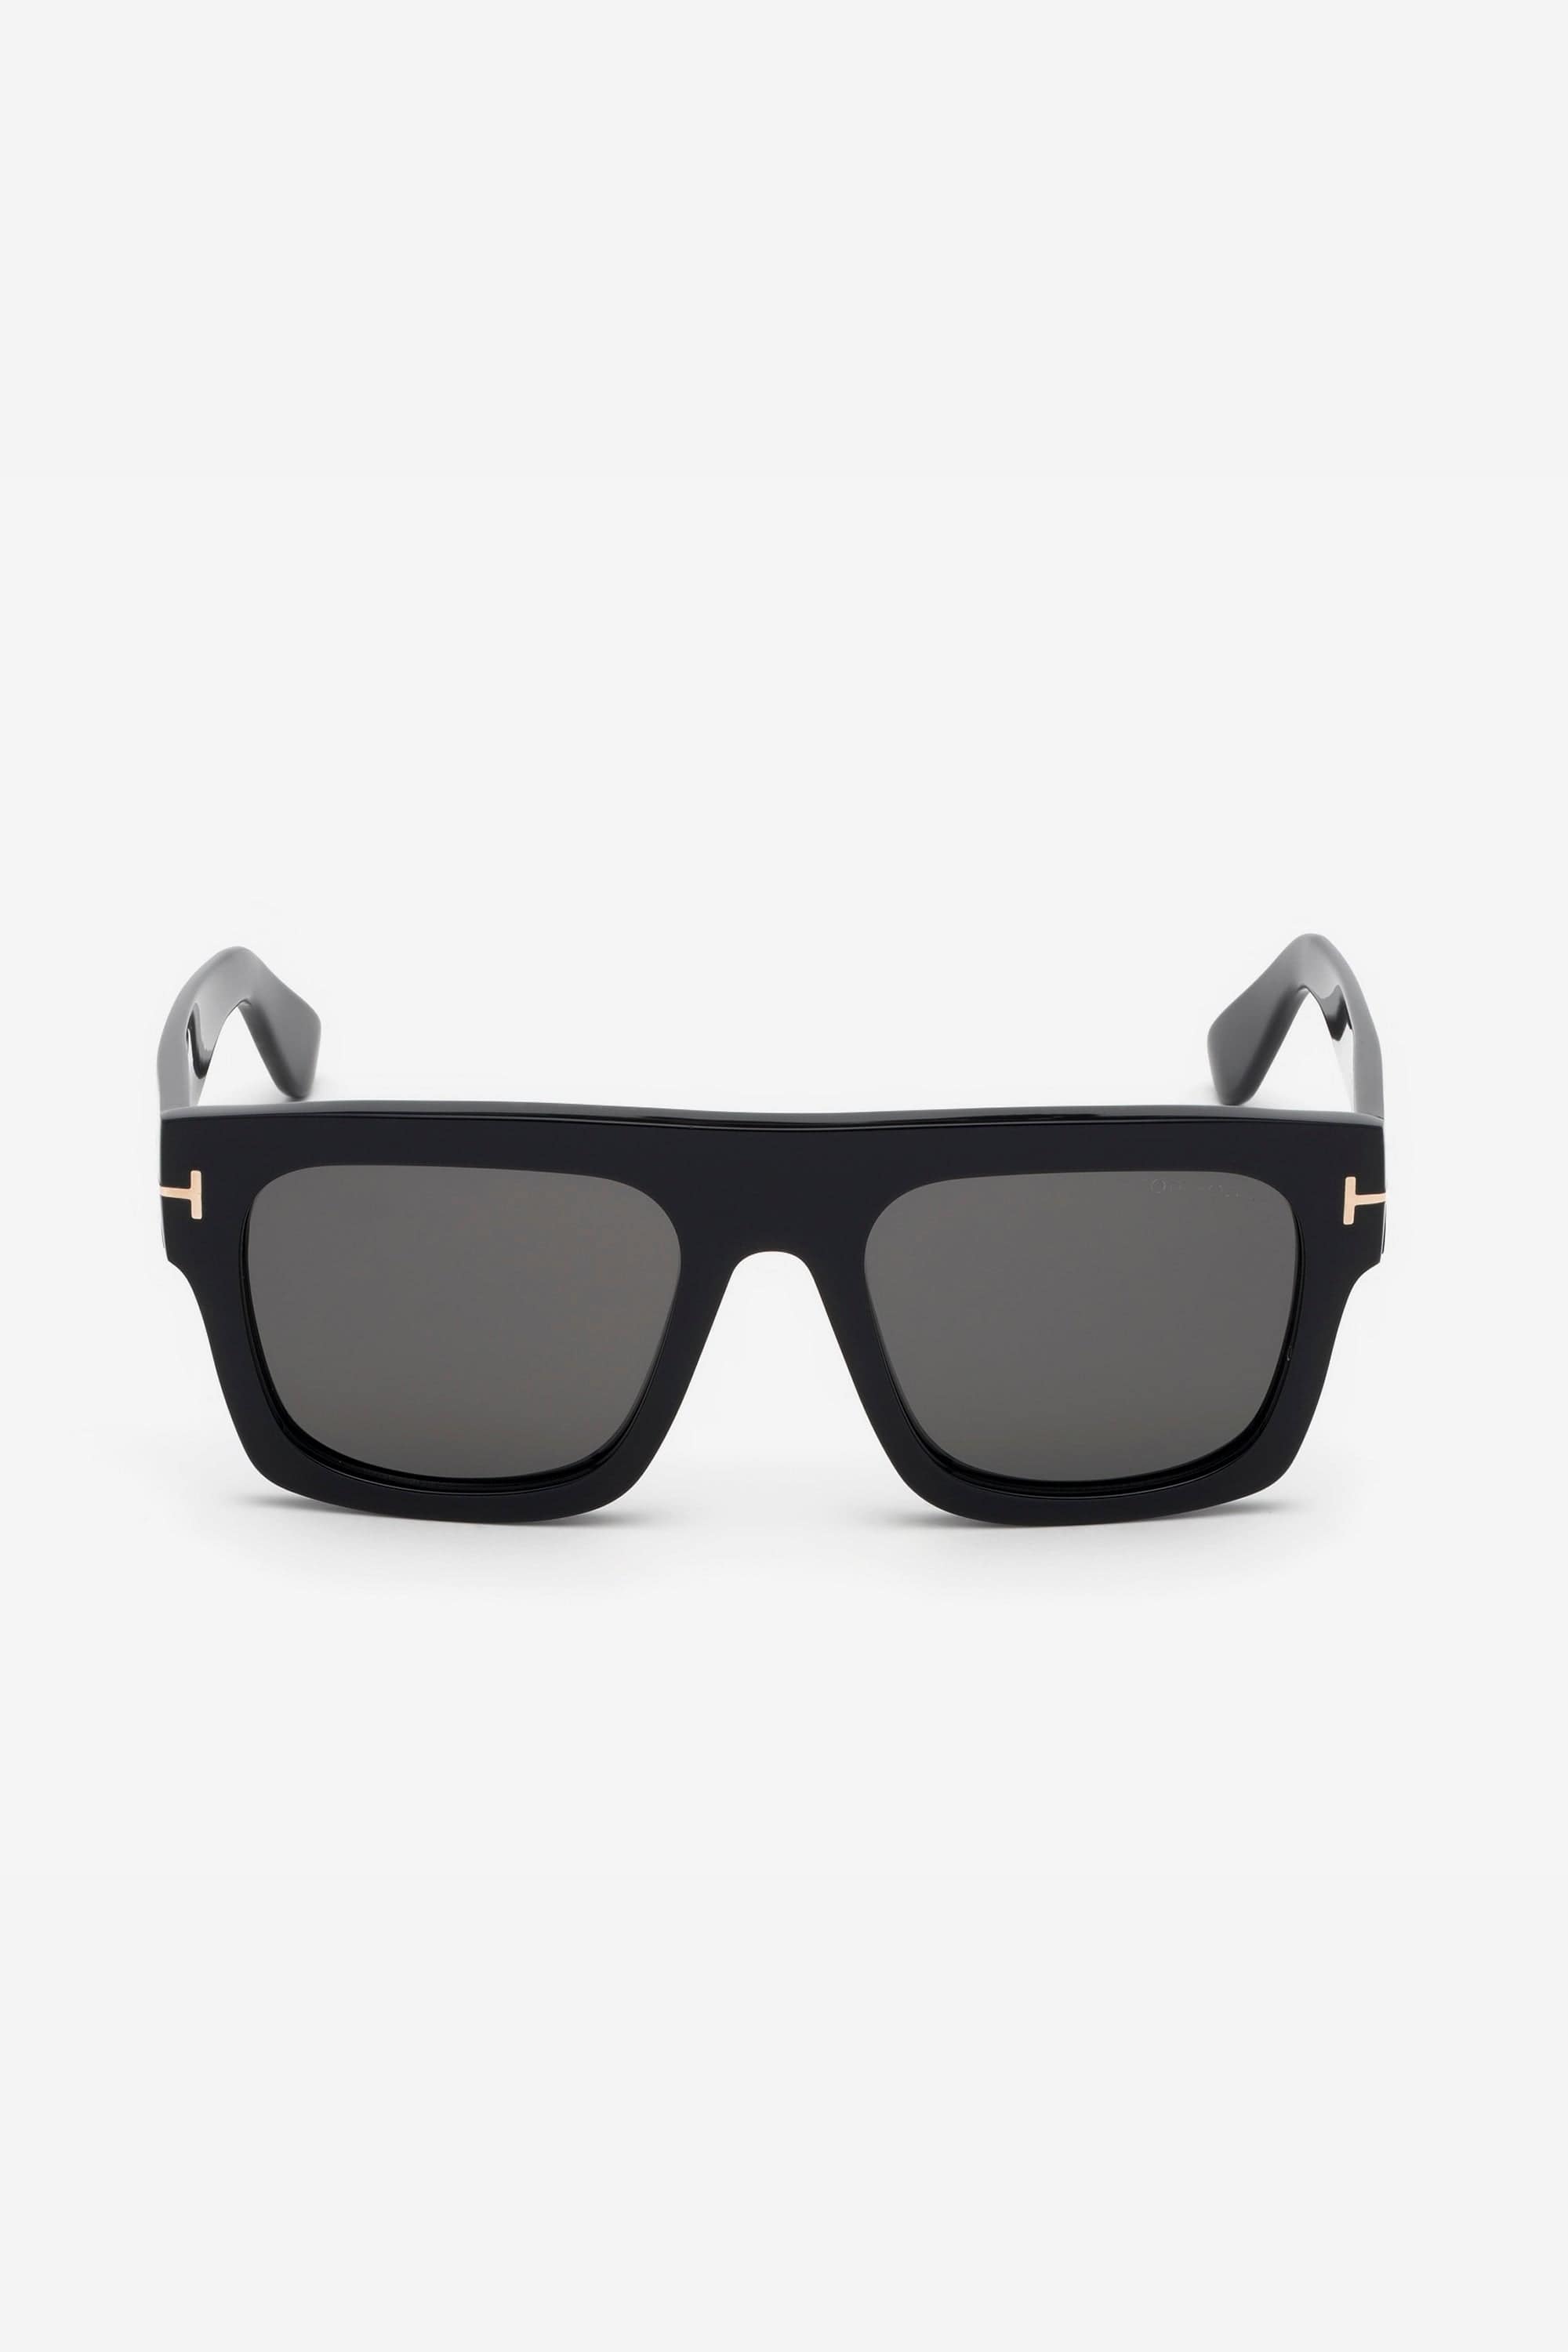 Tom Ford iconic Fausto sunglasses in black - Eyewear Club